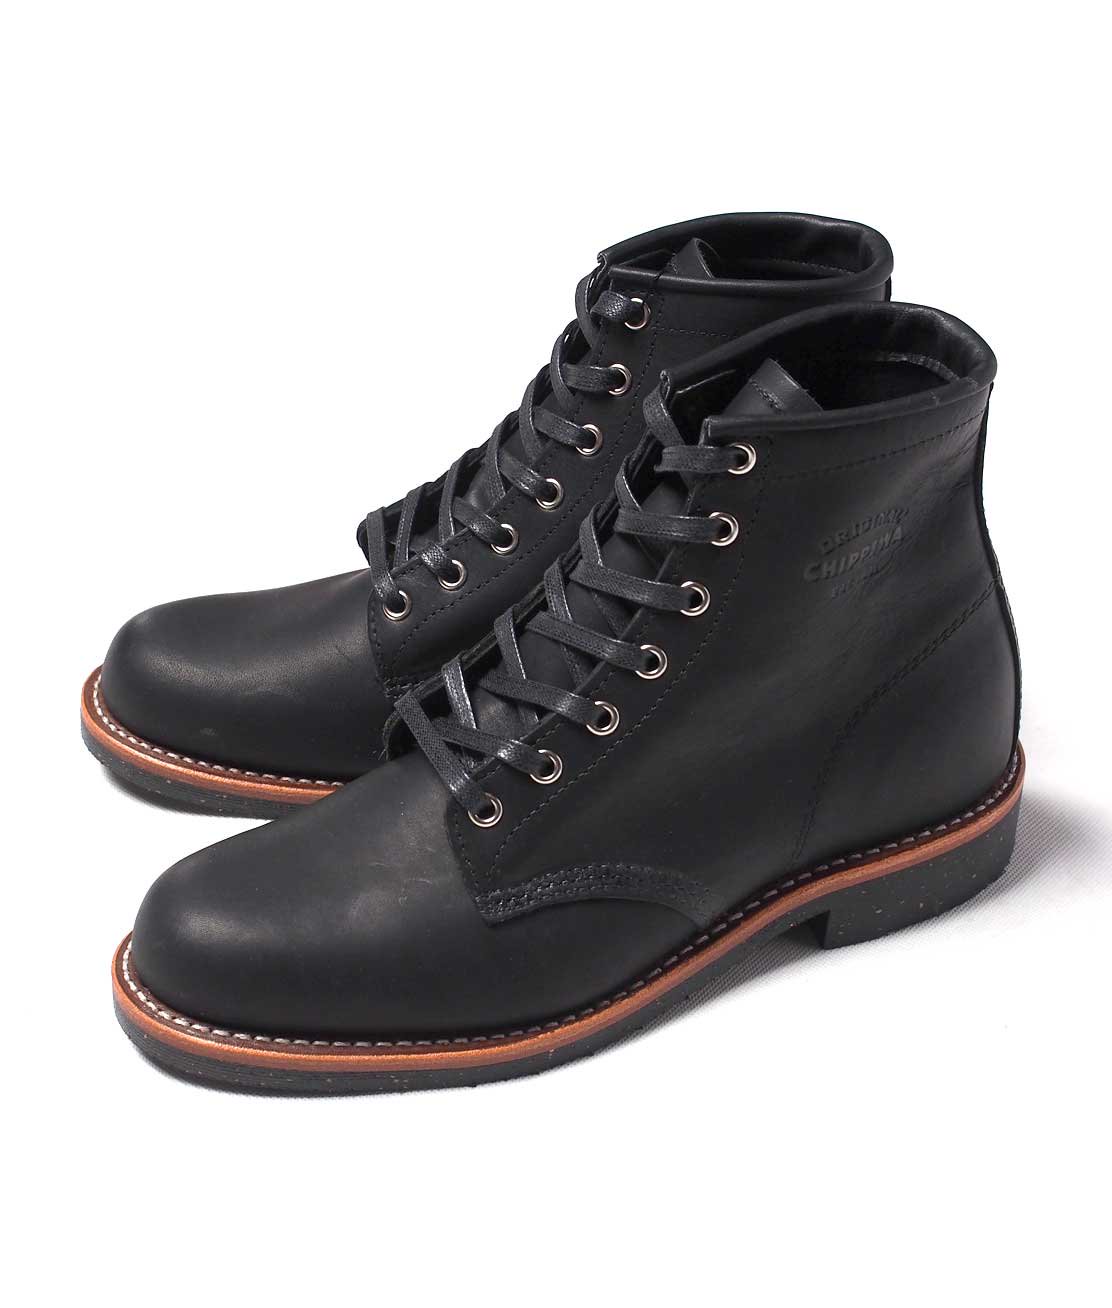 【CHIPPEWA】6-INCH UTILITY BOOTS - BLACK ODESSA ブーツ チペワ - HUNKY DORY